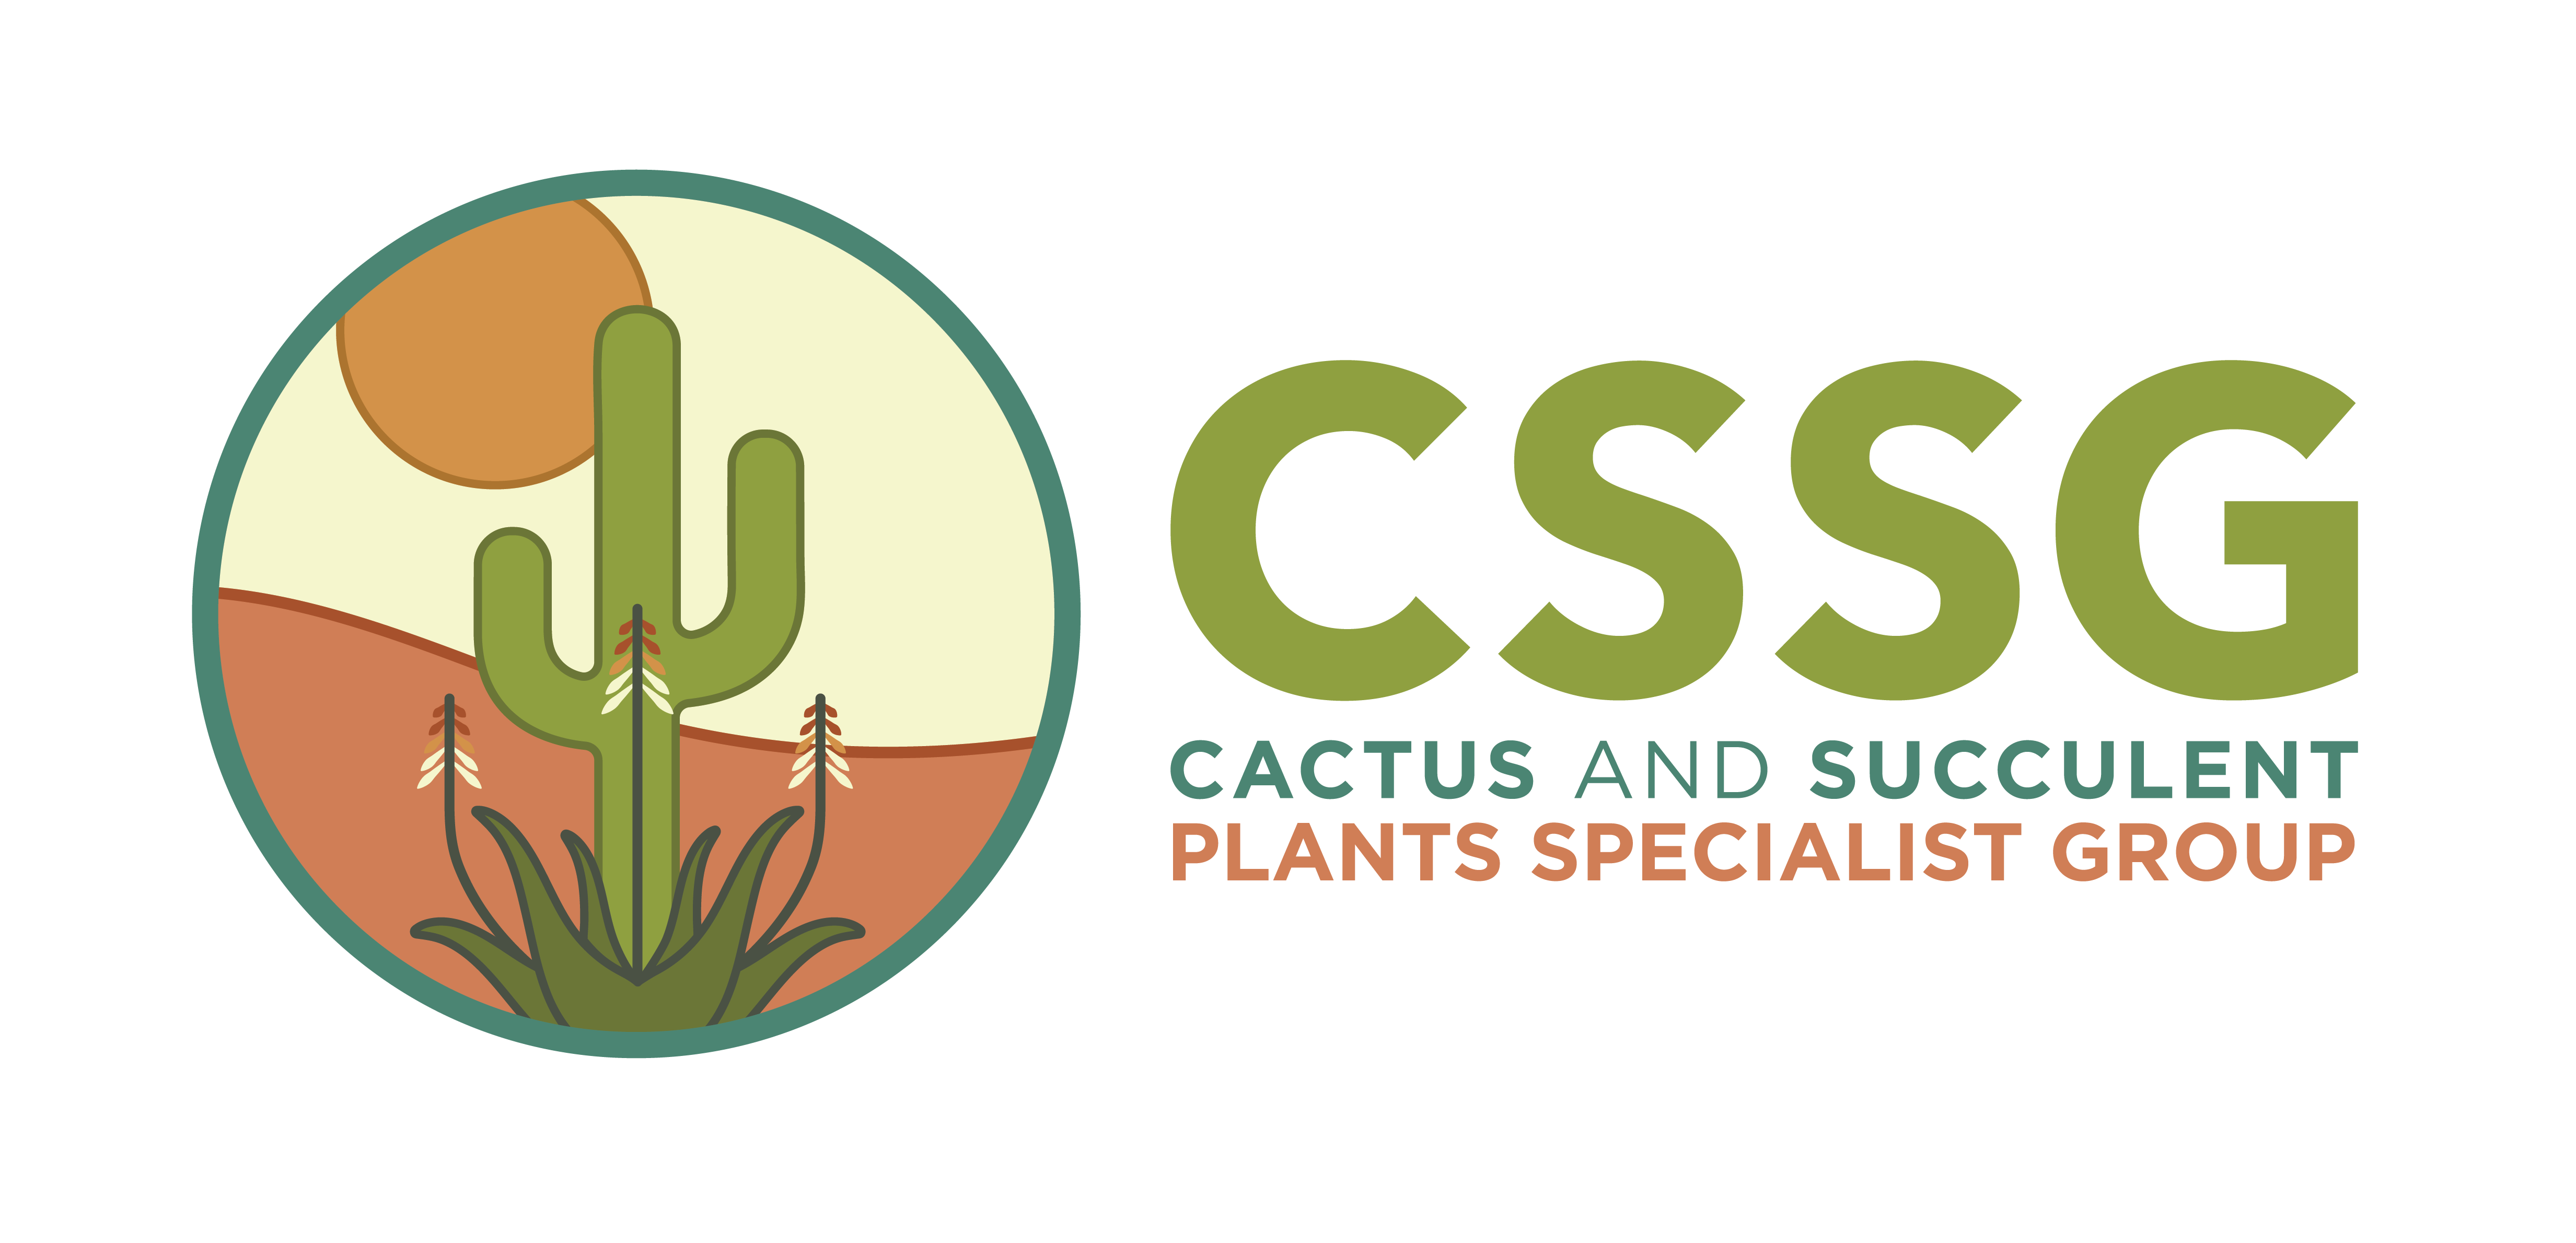 CSSG Logo